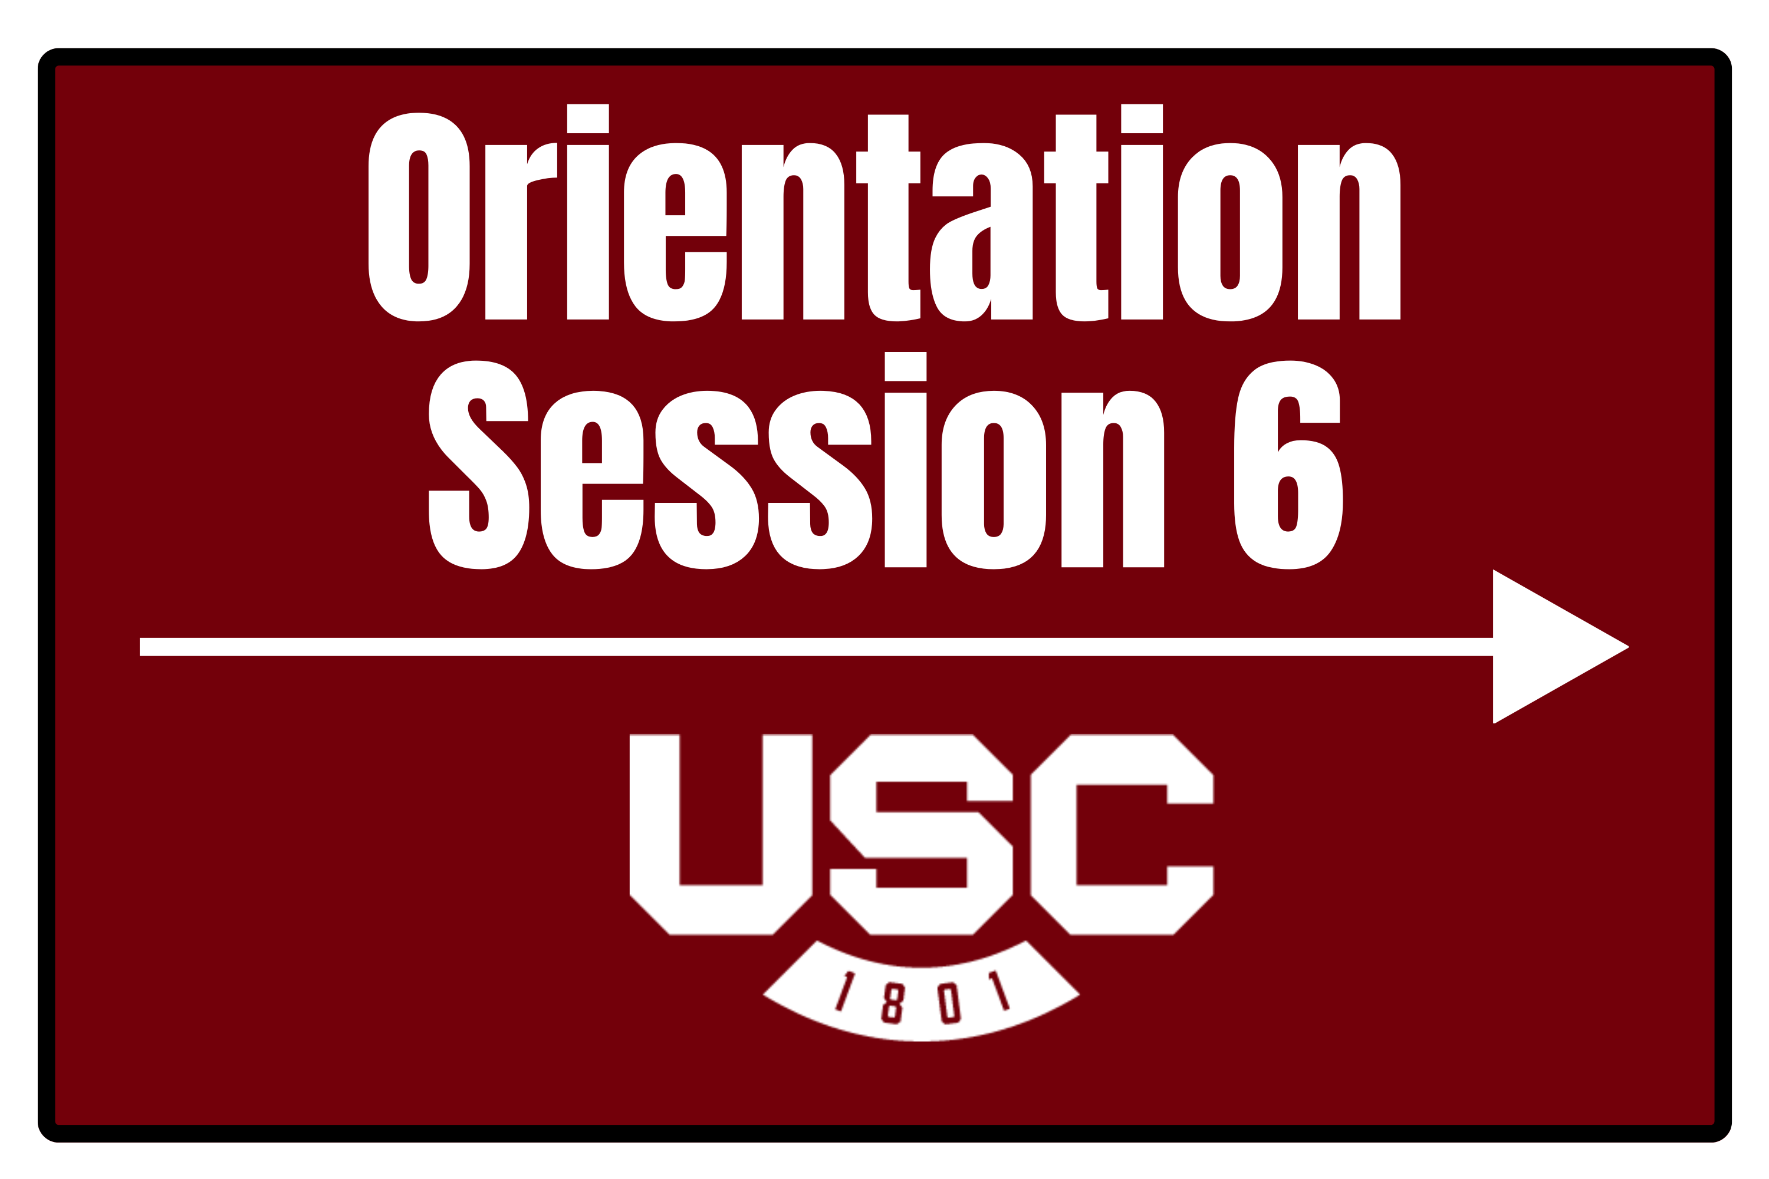 Orientation Session 6: June 12 - 13